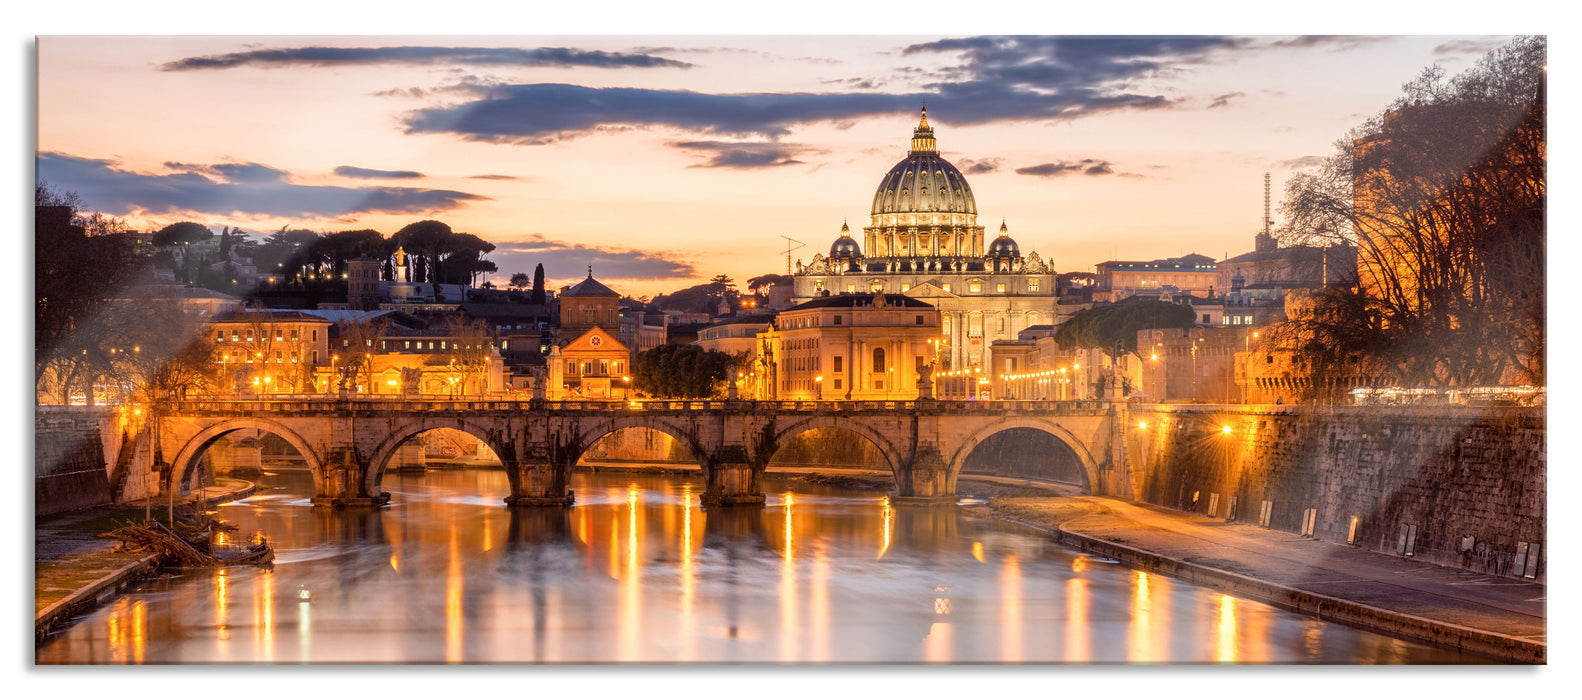 der Basilika St. Peter in Rom, Glasbild Panorama